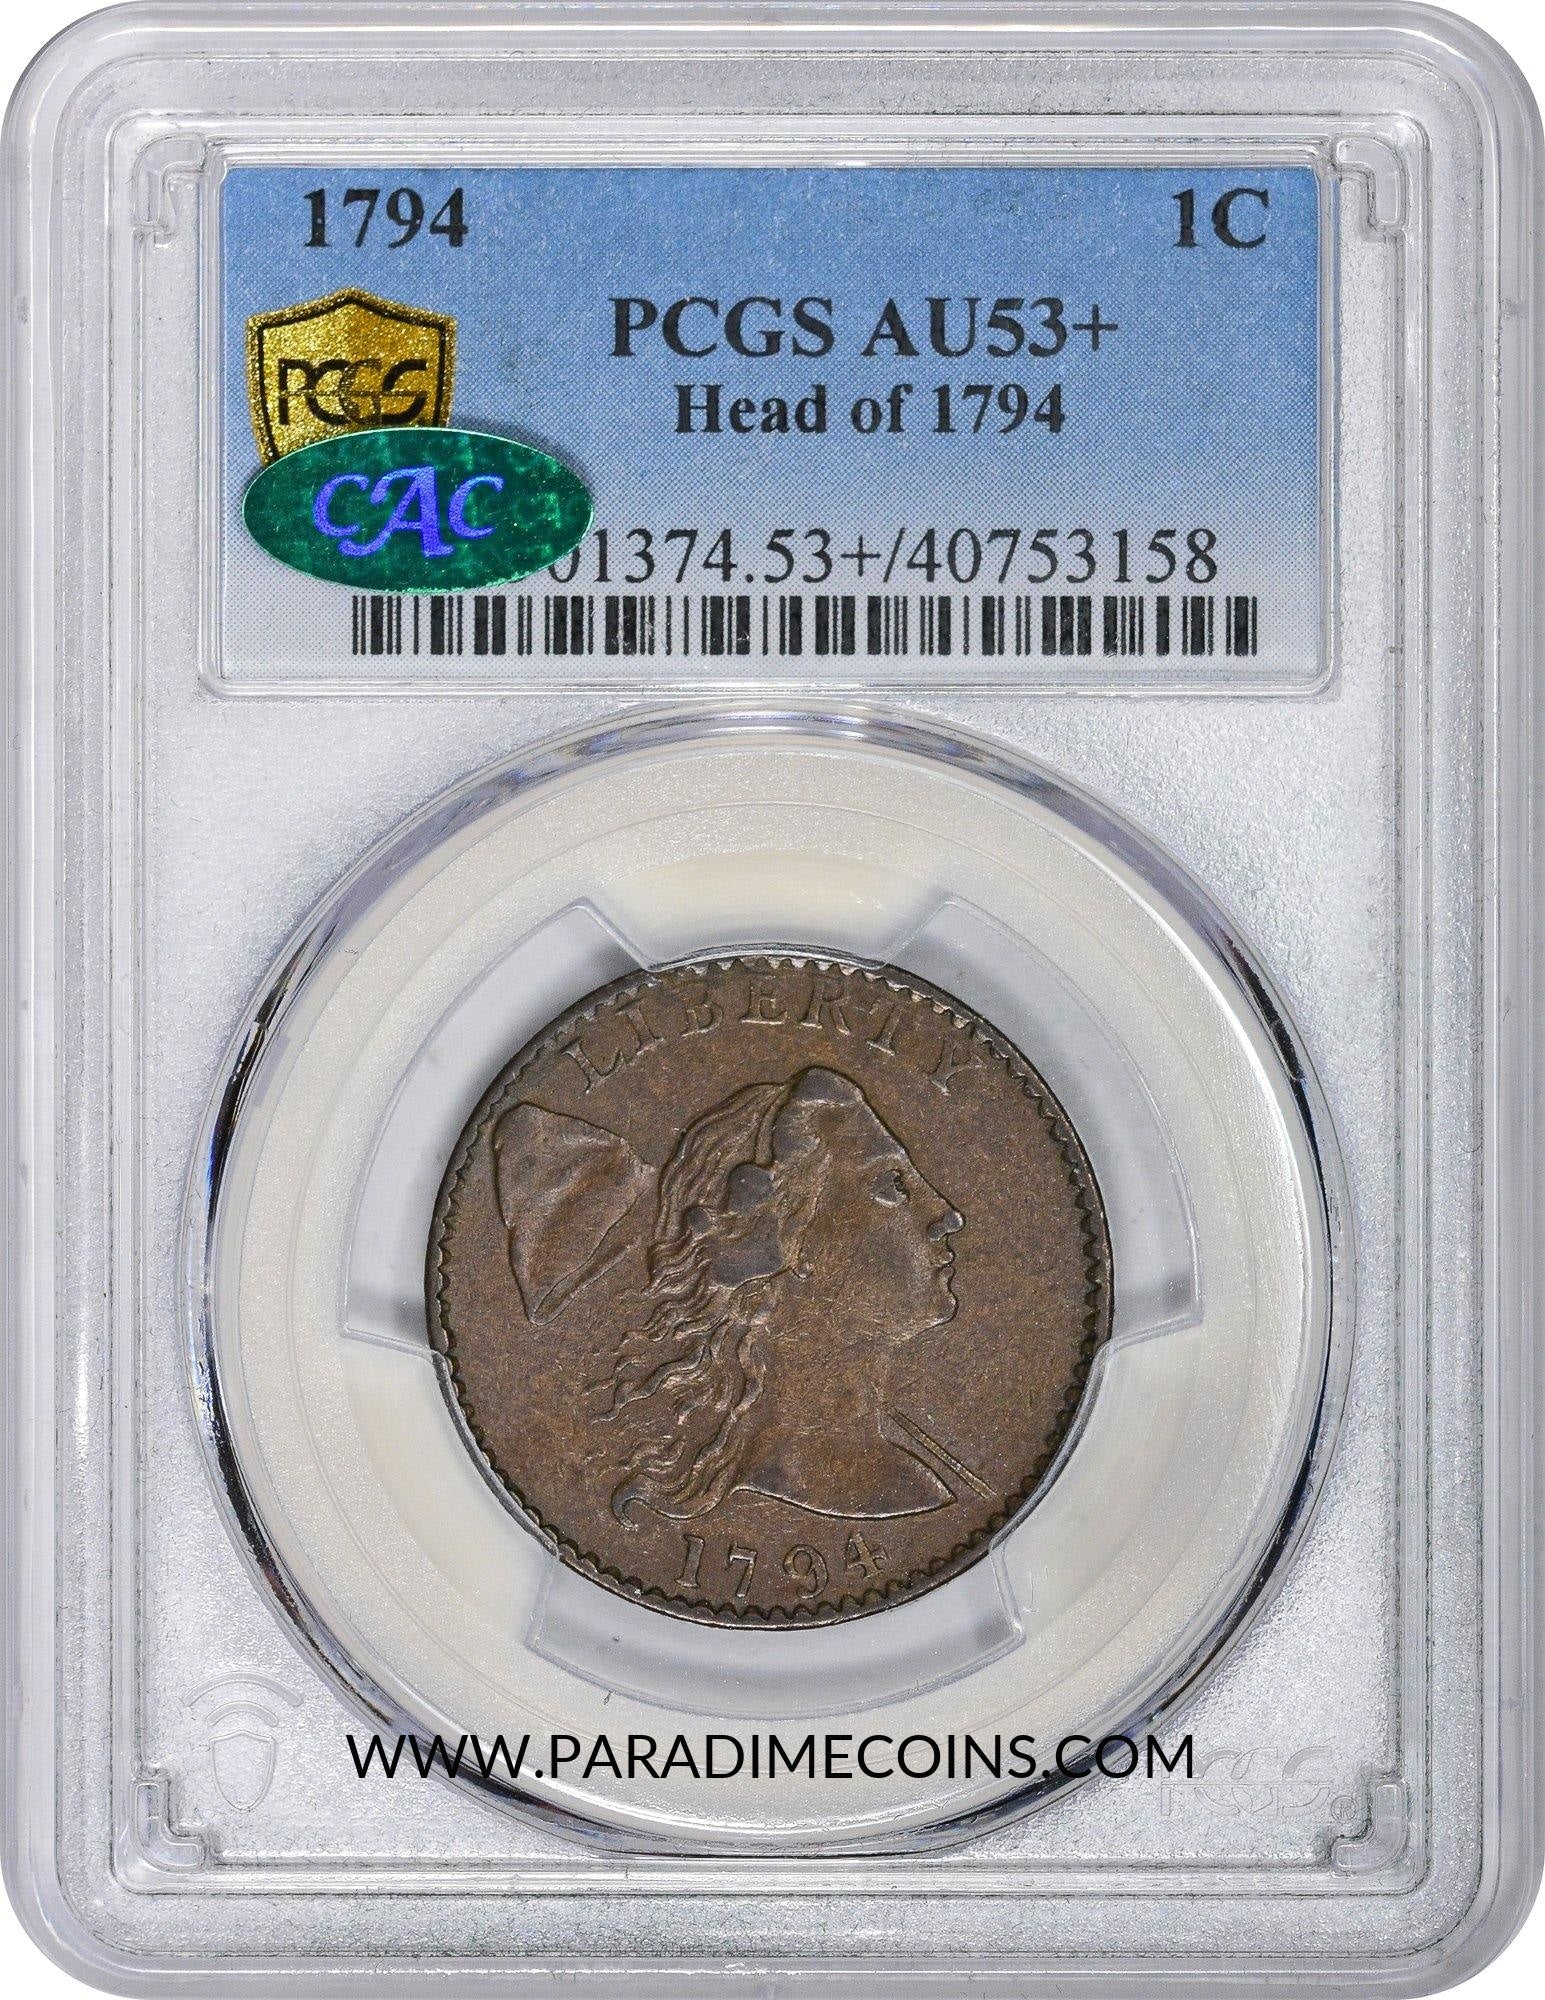 1794 1C S-26 HEAD OF 94 AU53+ PCGS CAC - Paradime Coins | PCGS NGC CACG CAC Rare US Numismatic Coins For Sale